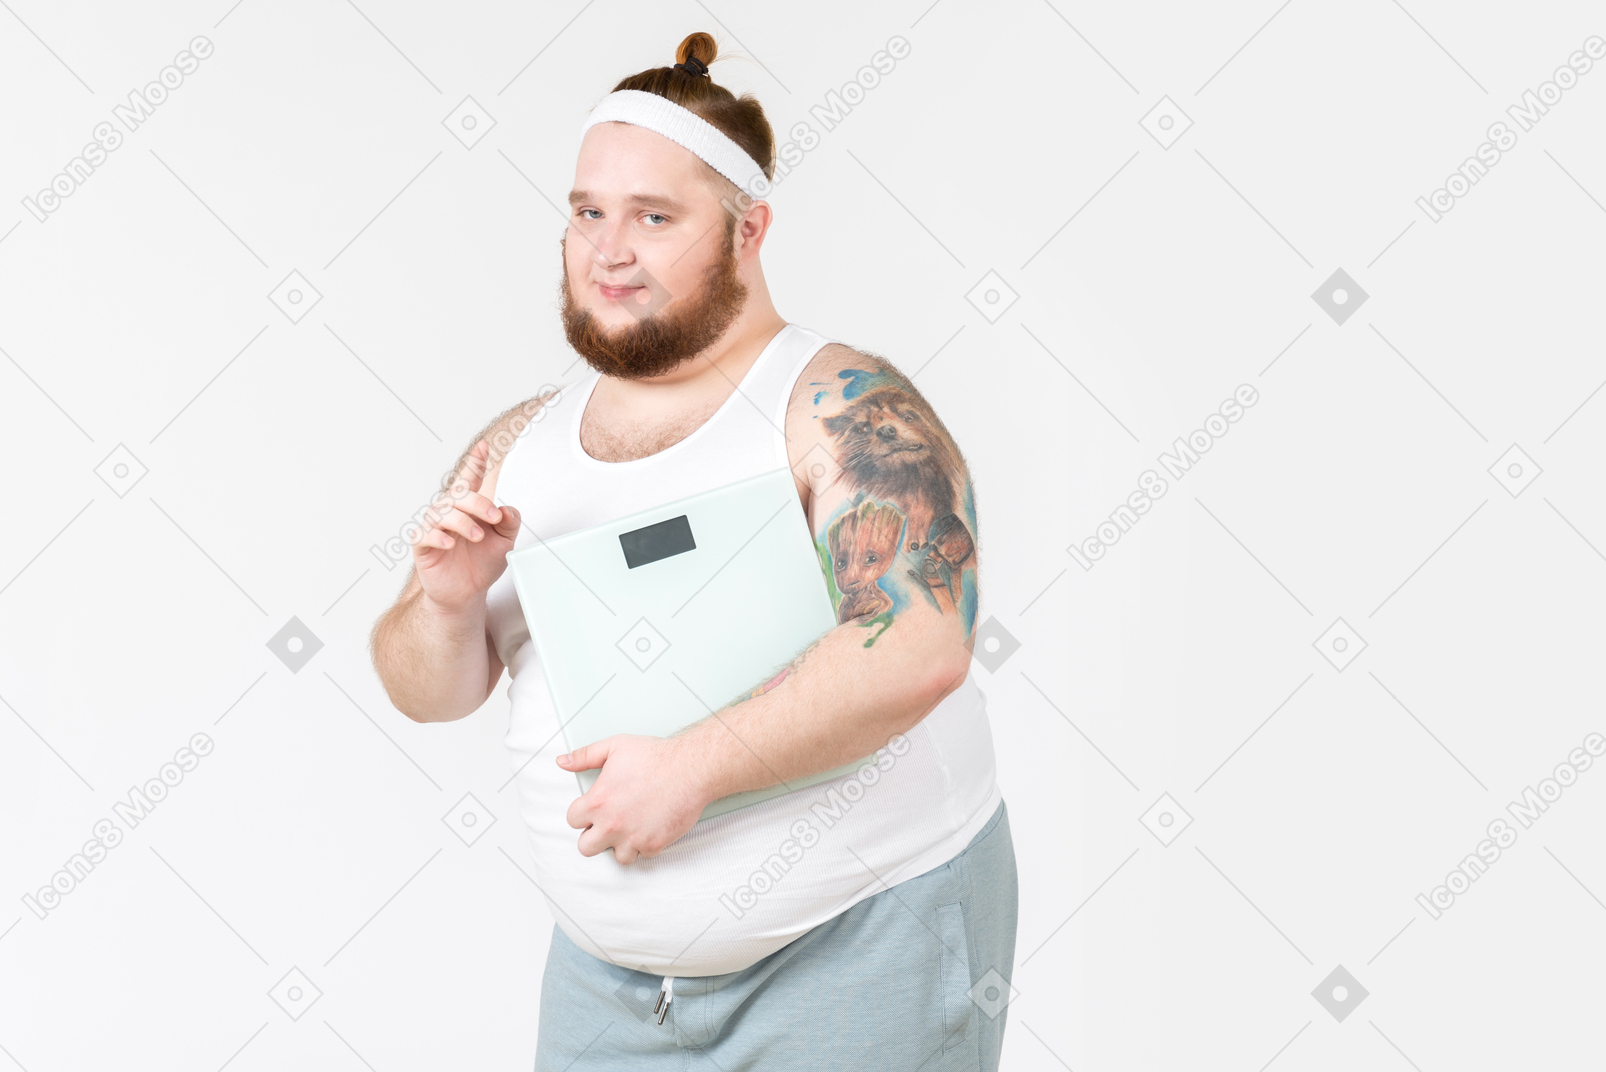 Big guy in sportswear holding digital weights